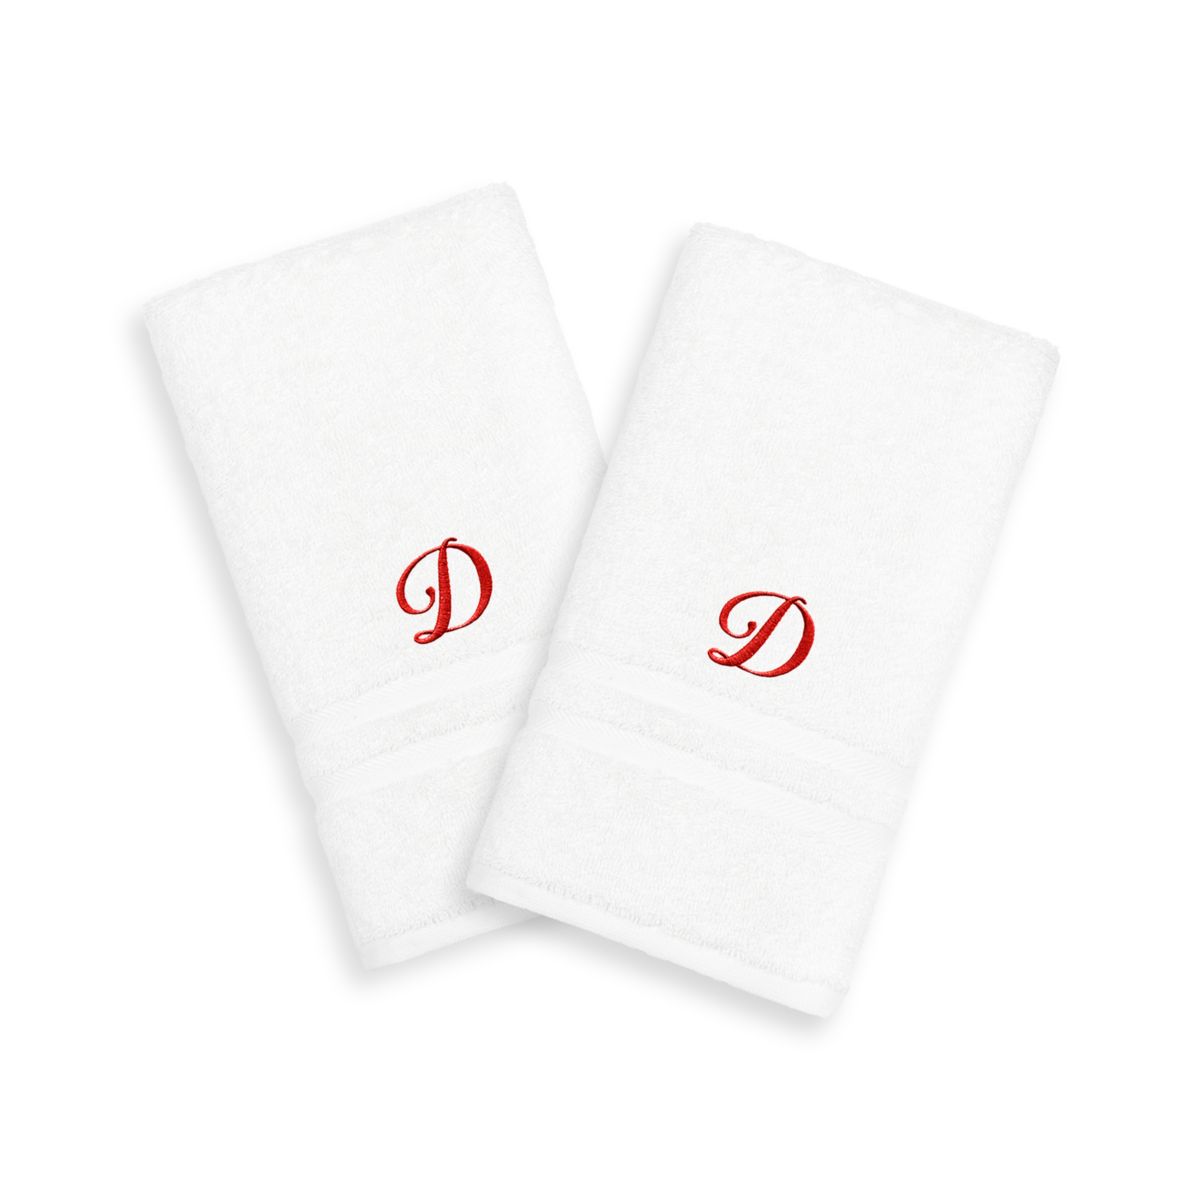 Linum Home Textiles Red Script Denzi Single Letter Полотенца для рук с монограммой, 2 упаковки Linum Home